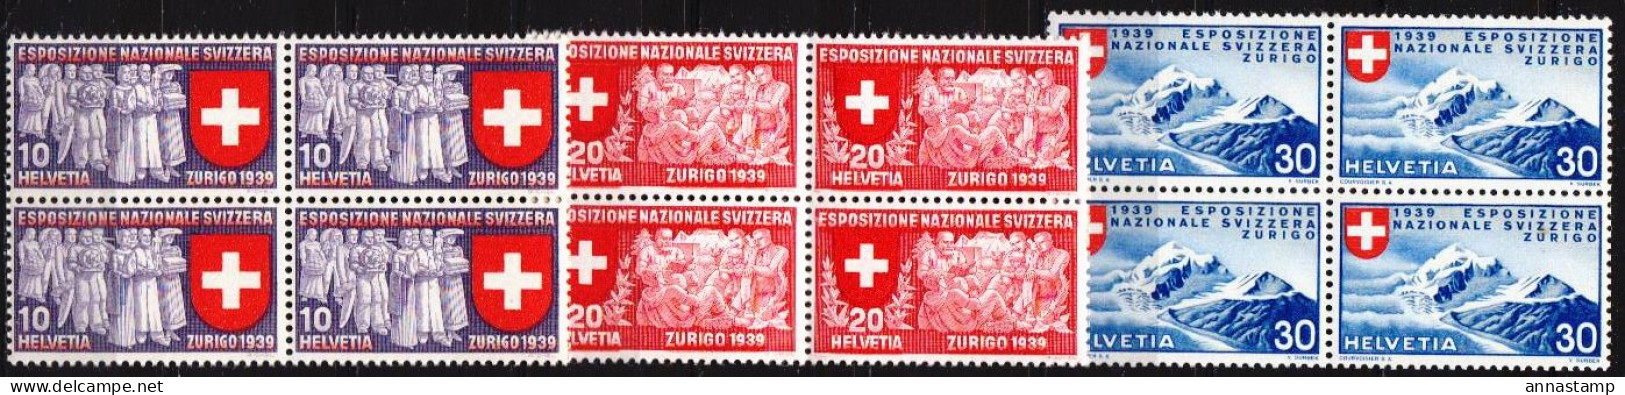 Switzerland MNH Set In Blocks Of 4 Stamps, Italian Inscription - Philatelic Exhibitions